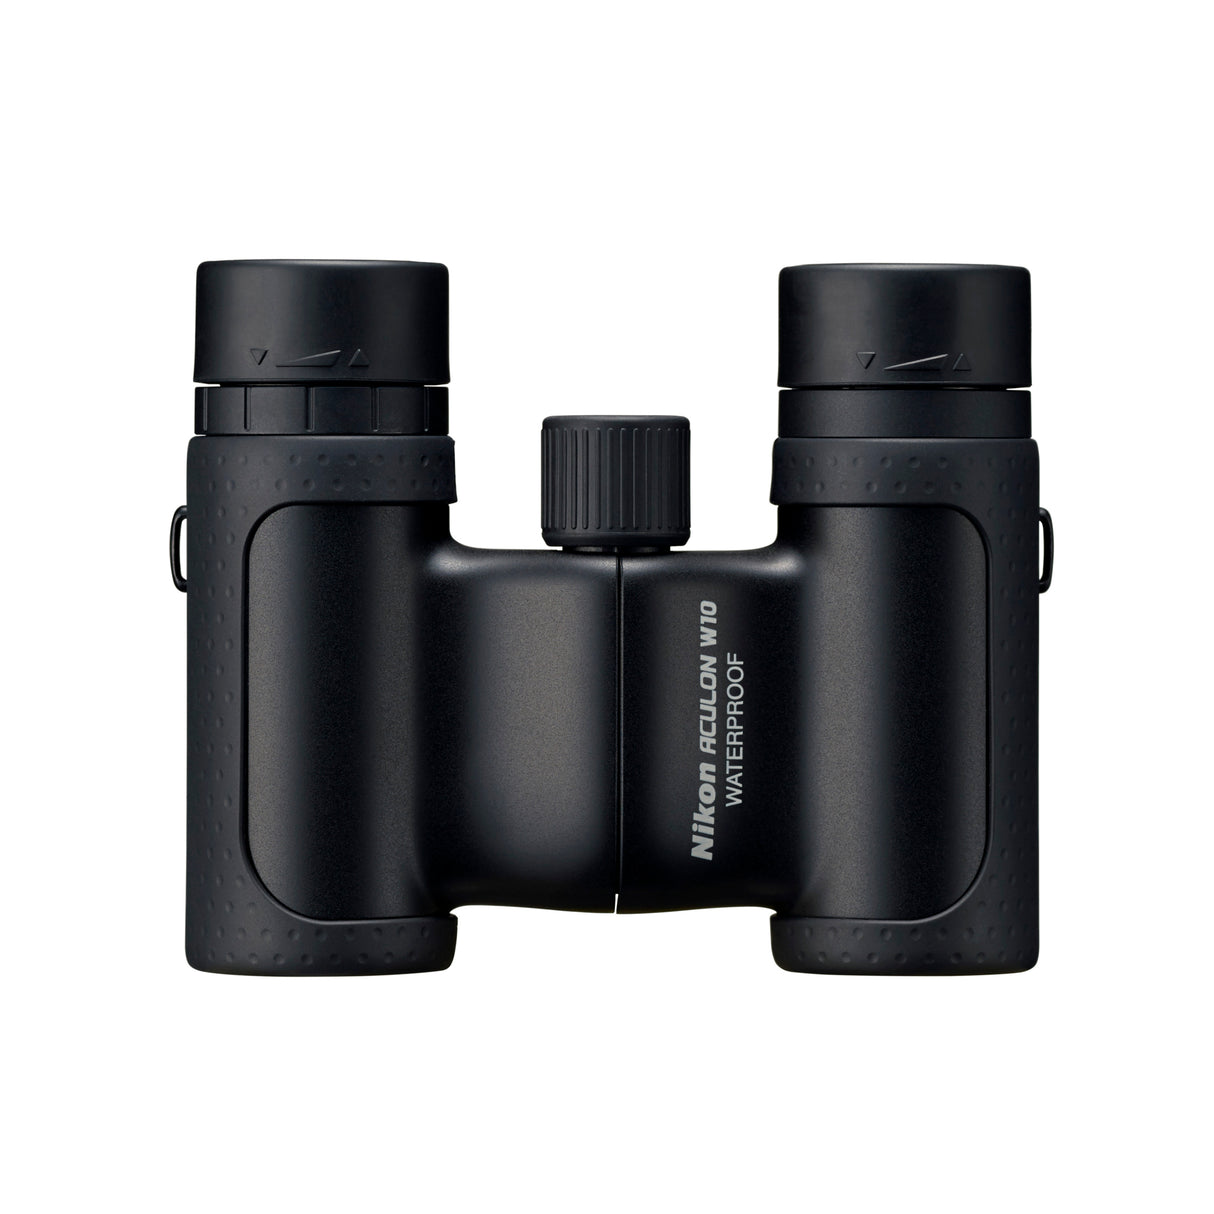 Nikon Aculon W10 Binoculars